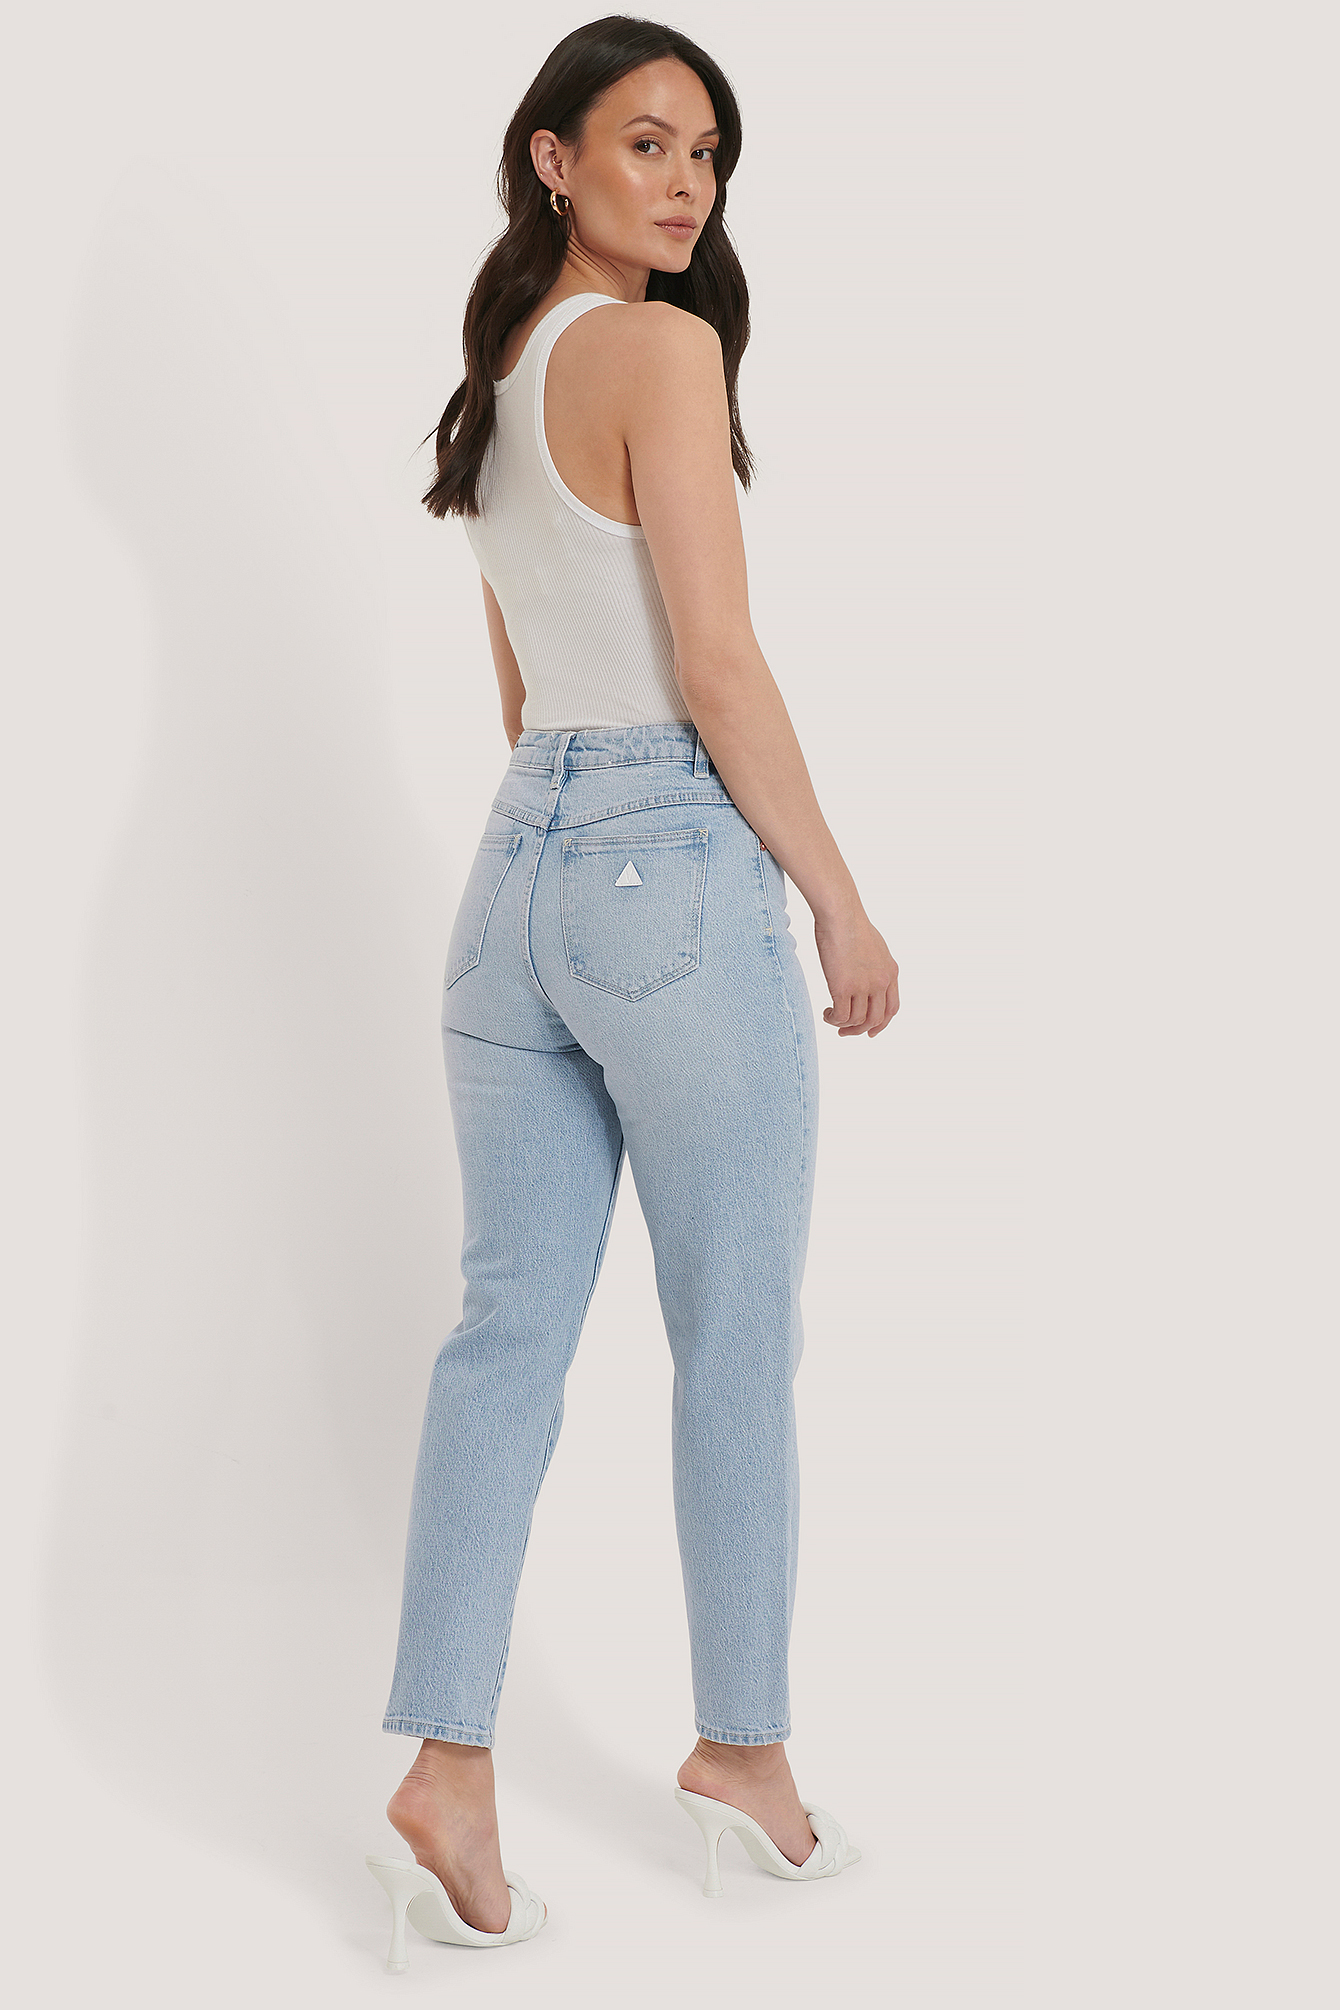 Gina A 94 High Slim Jeans